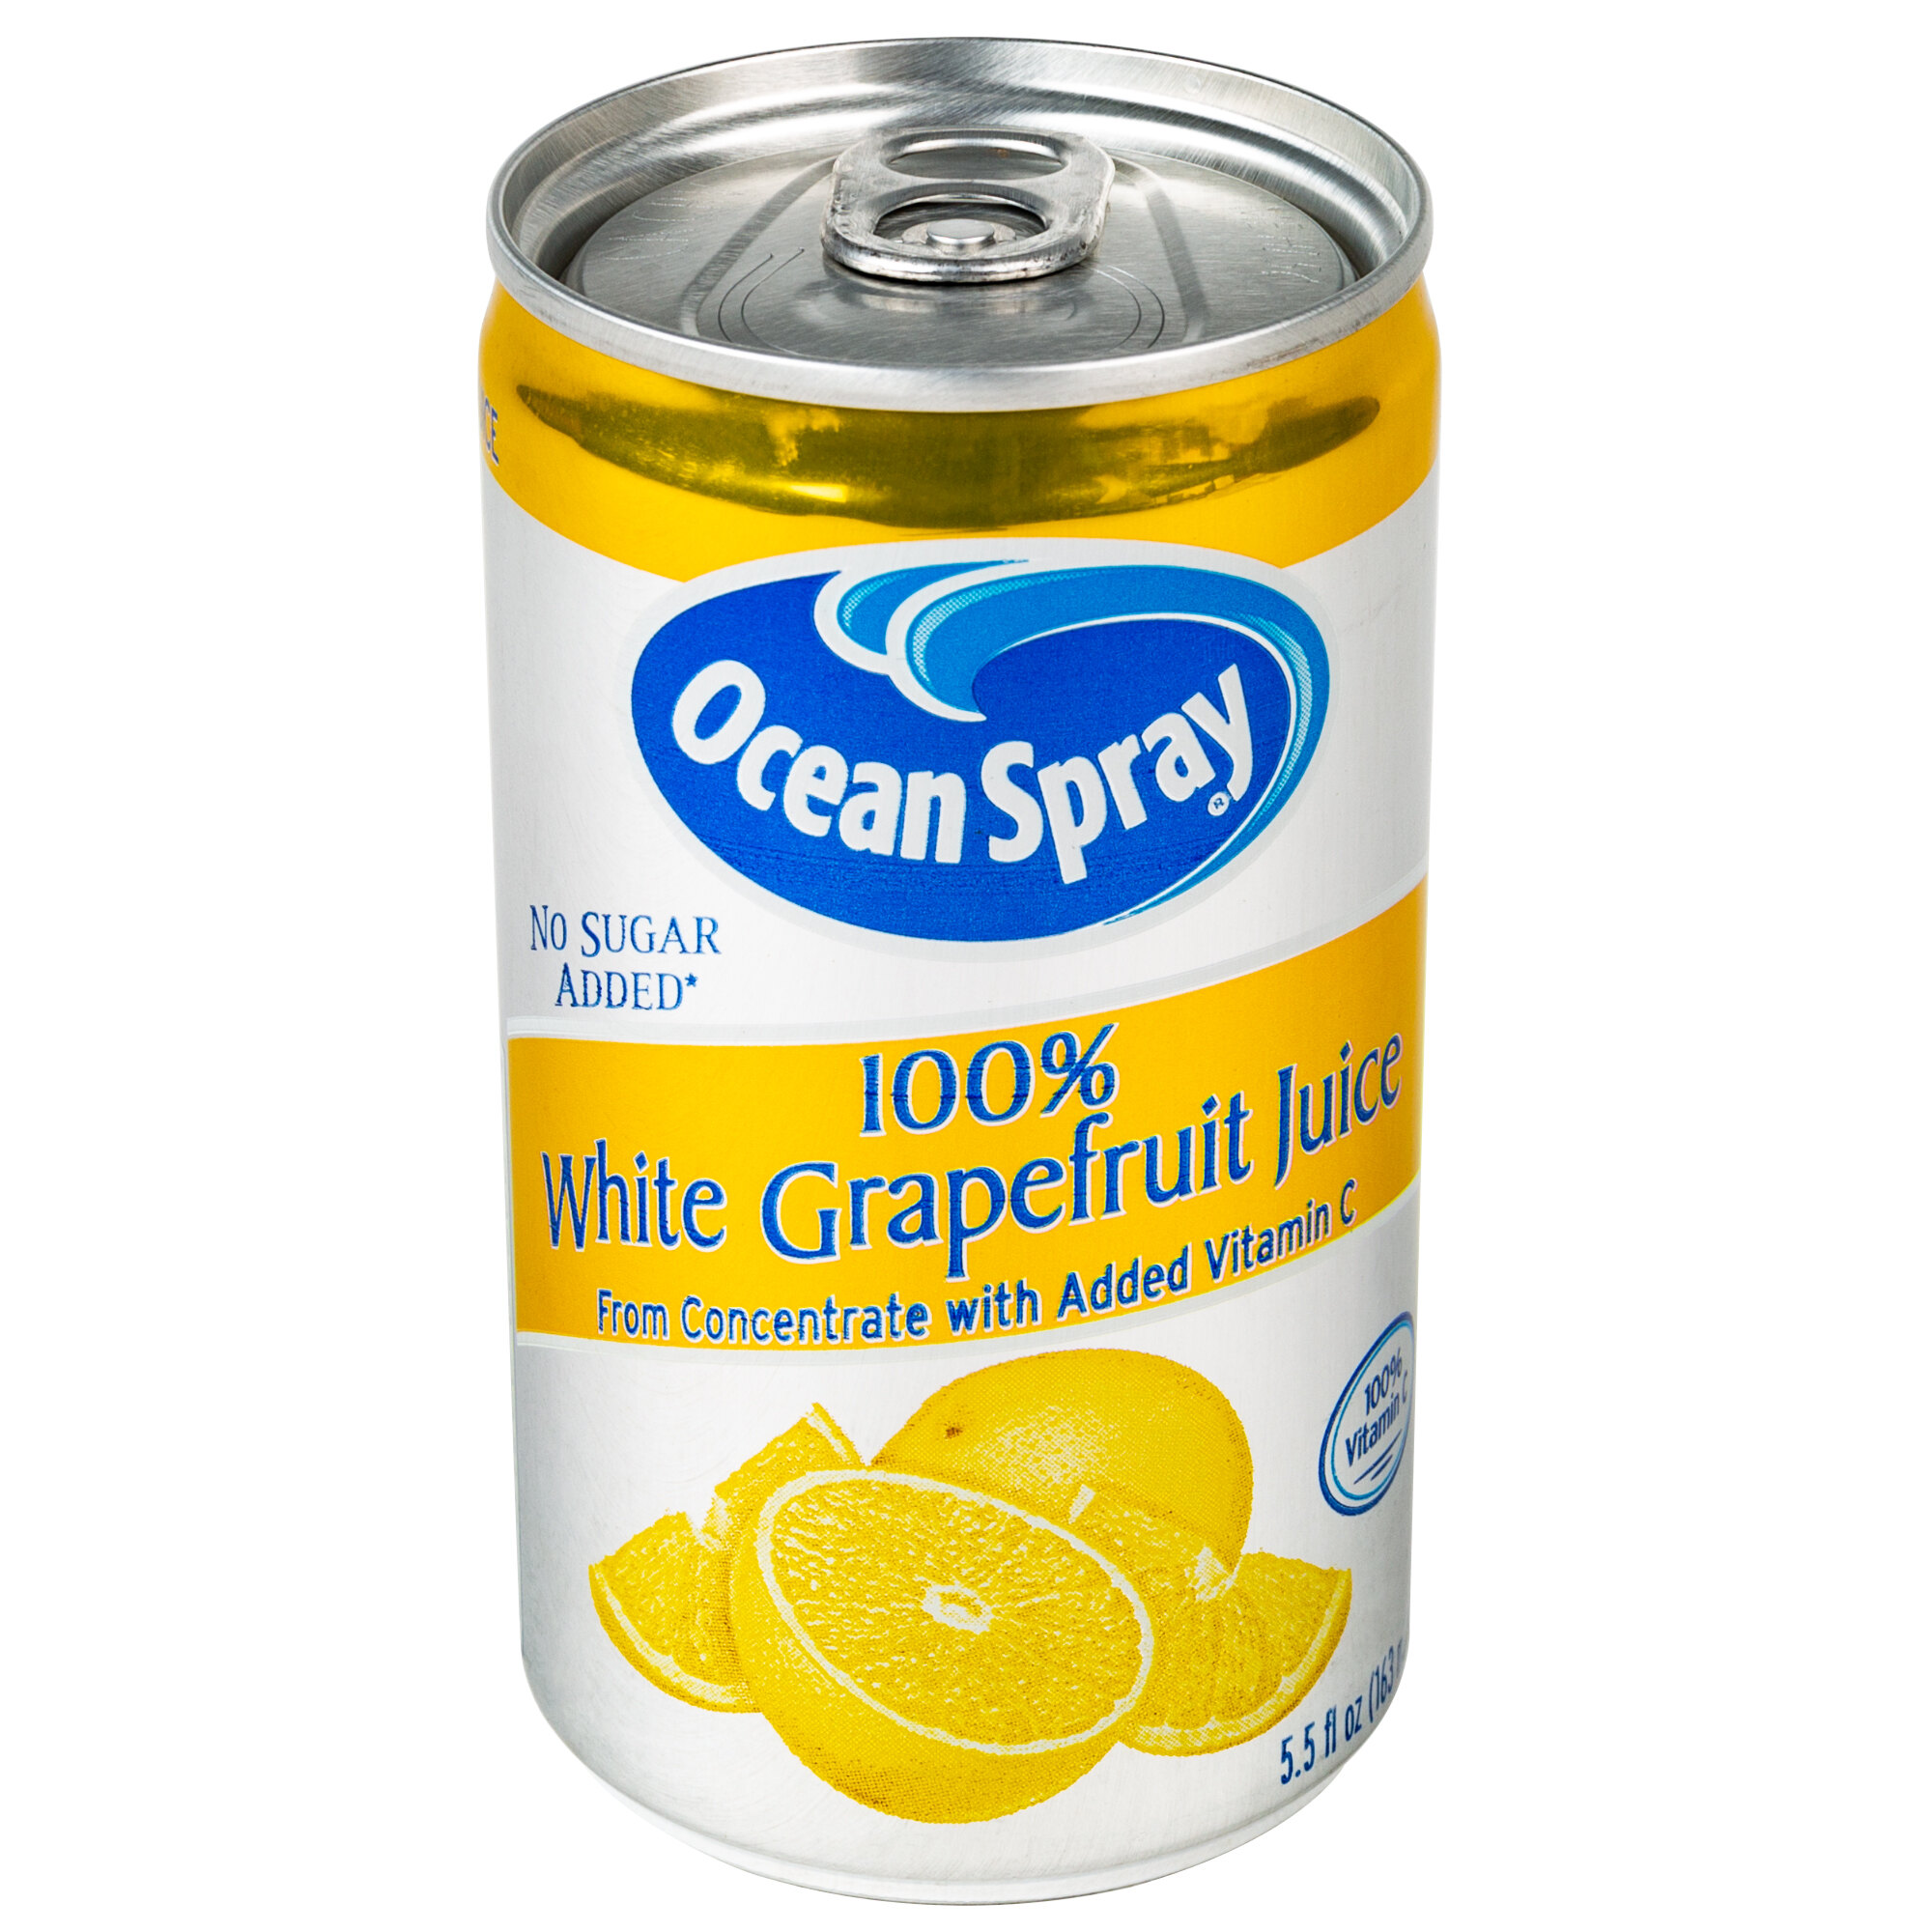 white grapefruit juice mix